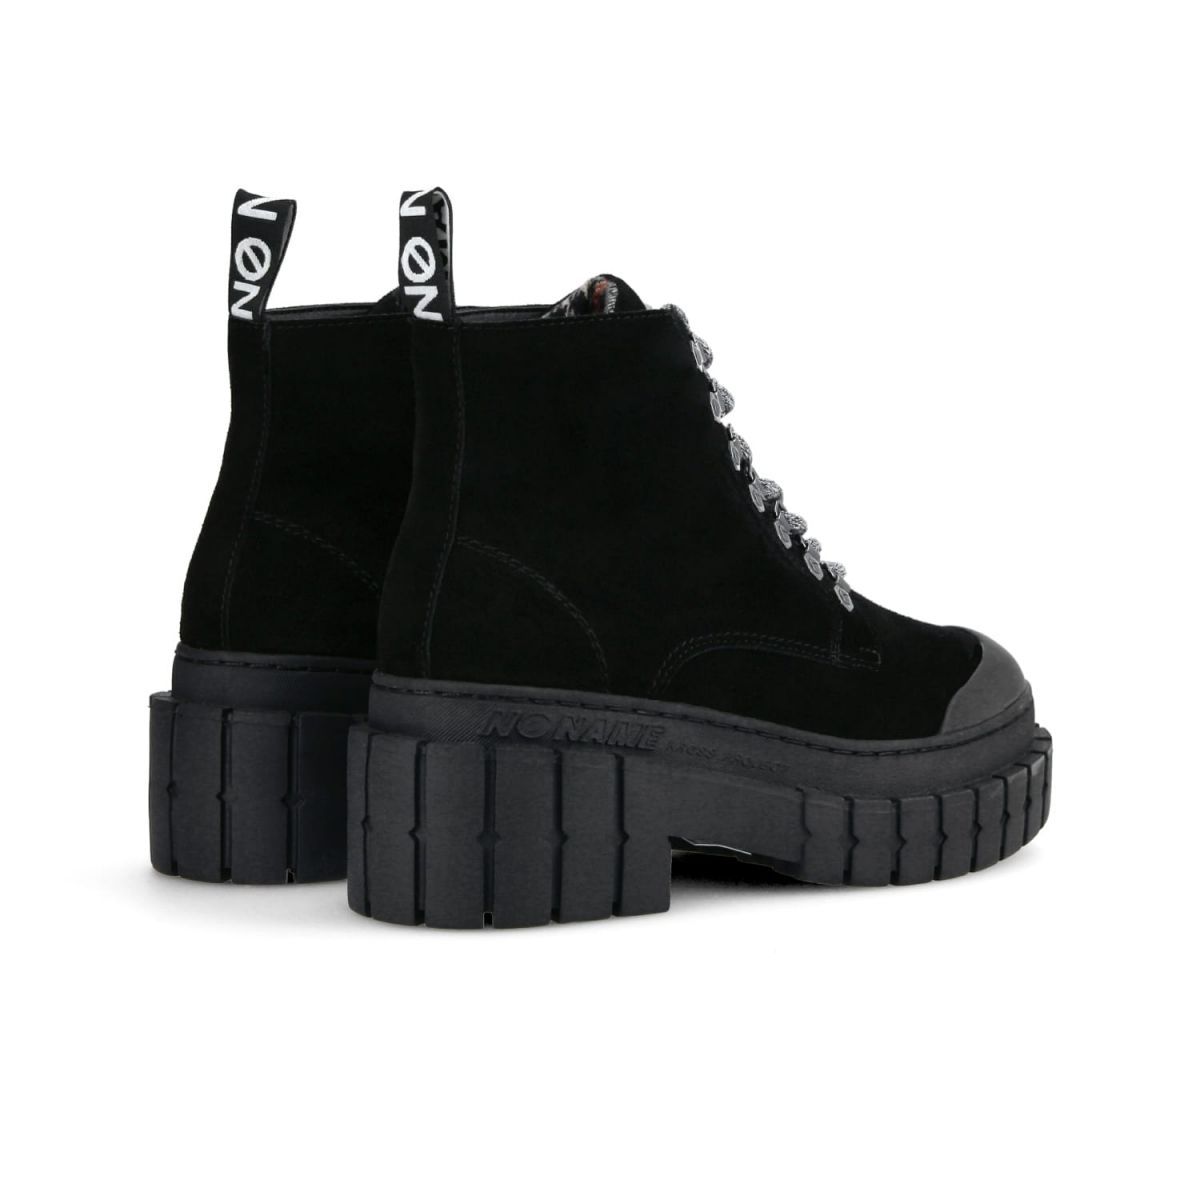 Kross Low Suede Black Boots KNXEVS0415 - 3